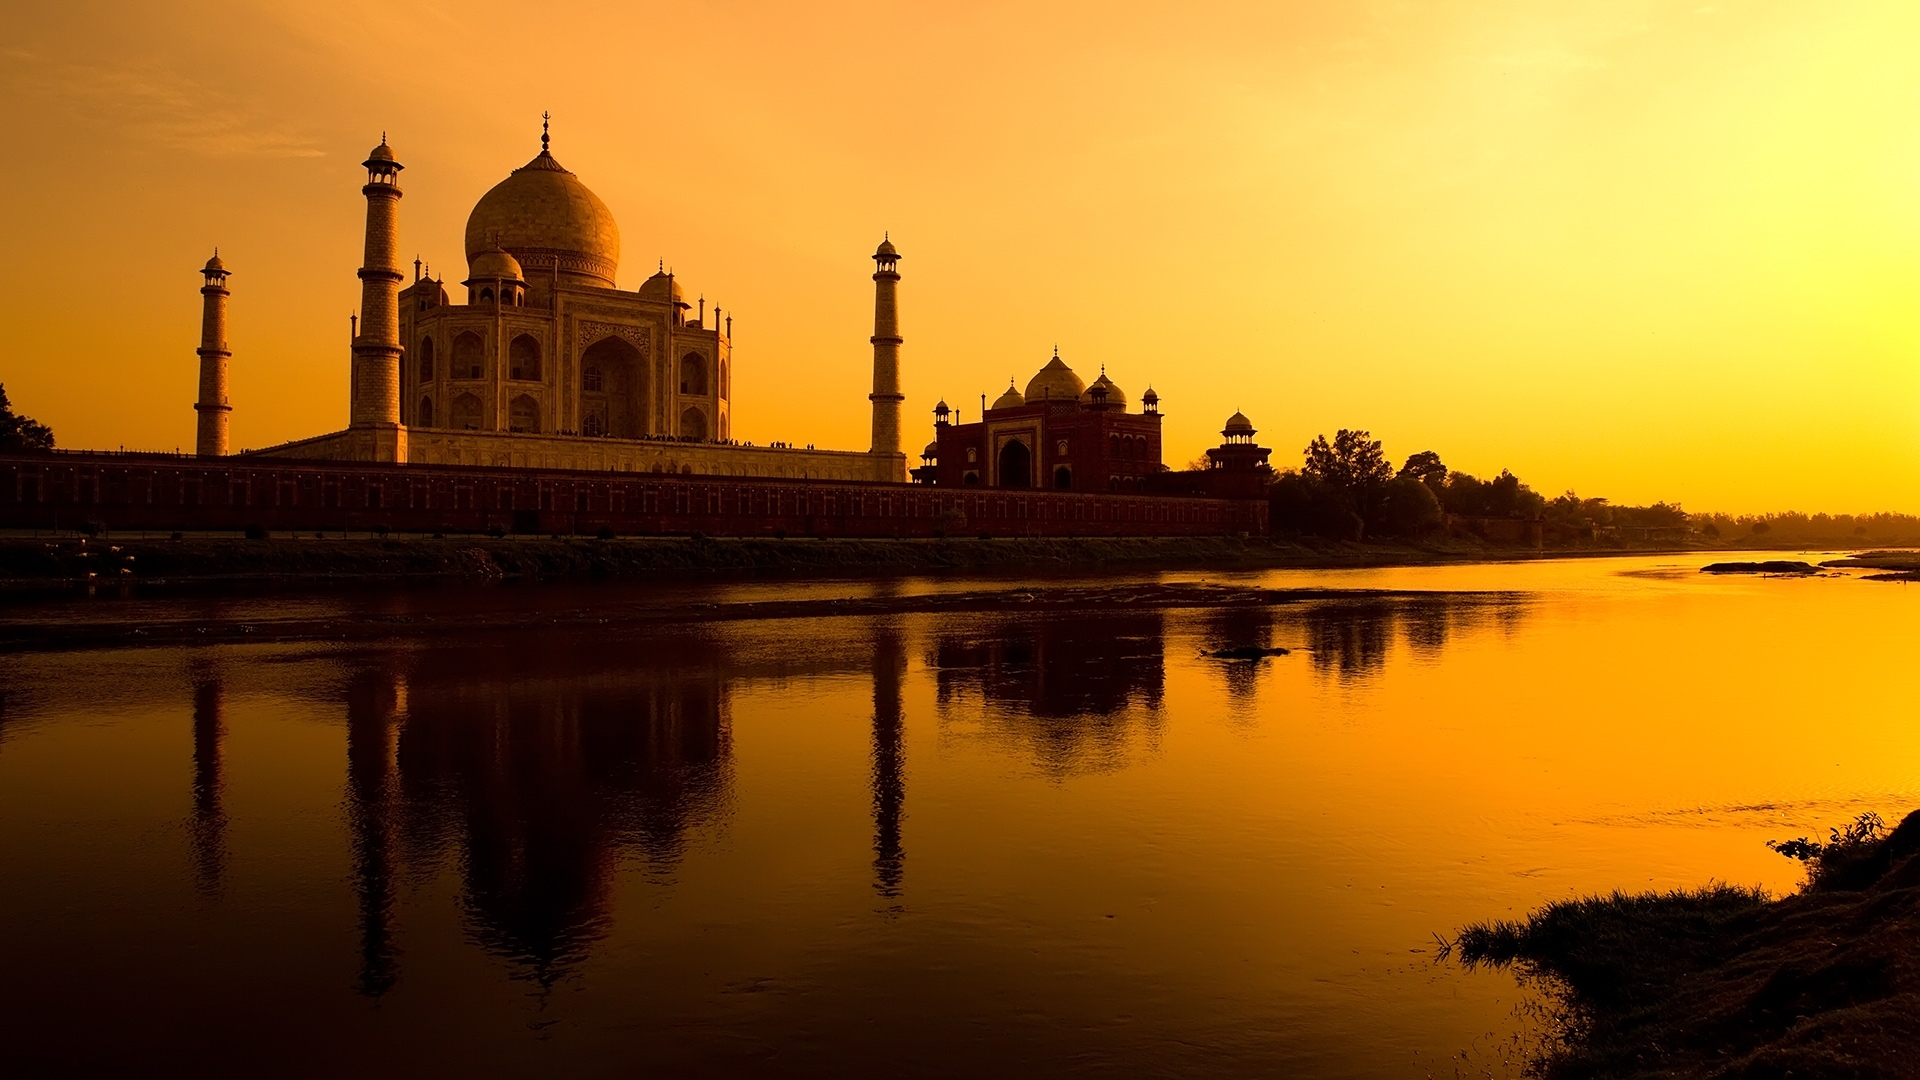 1080p Taj Mahal Hd Images